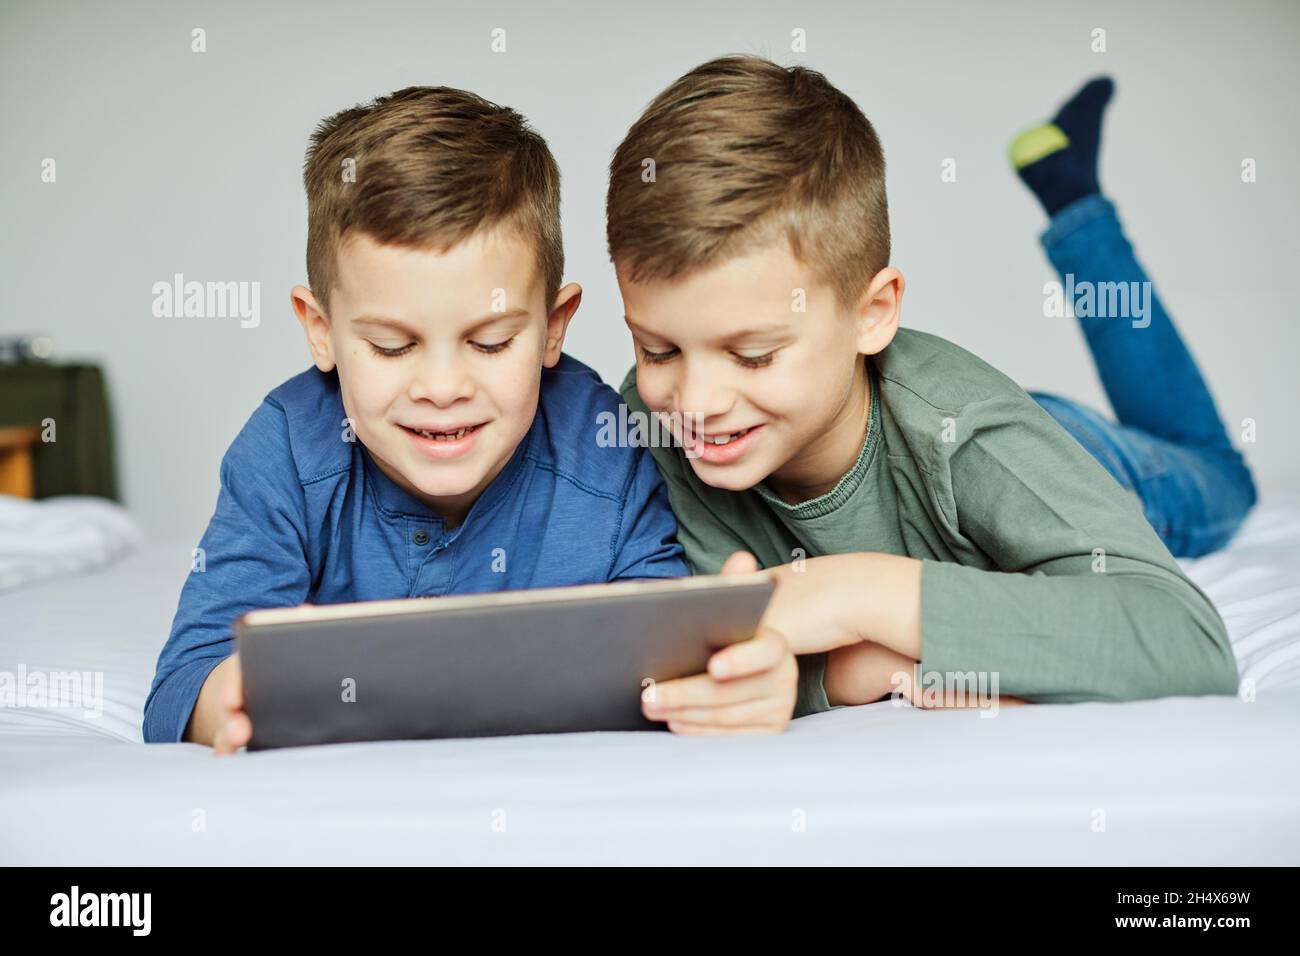 child brother friend having fun tablet laptop happy kid Stock Photo